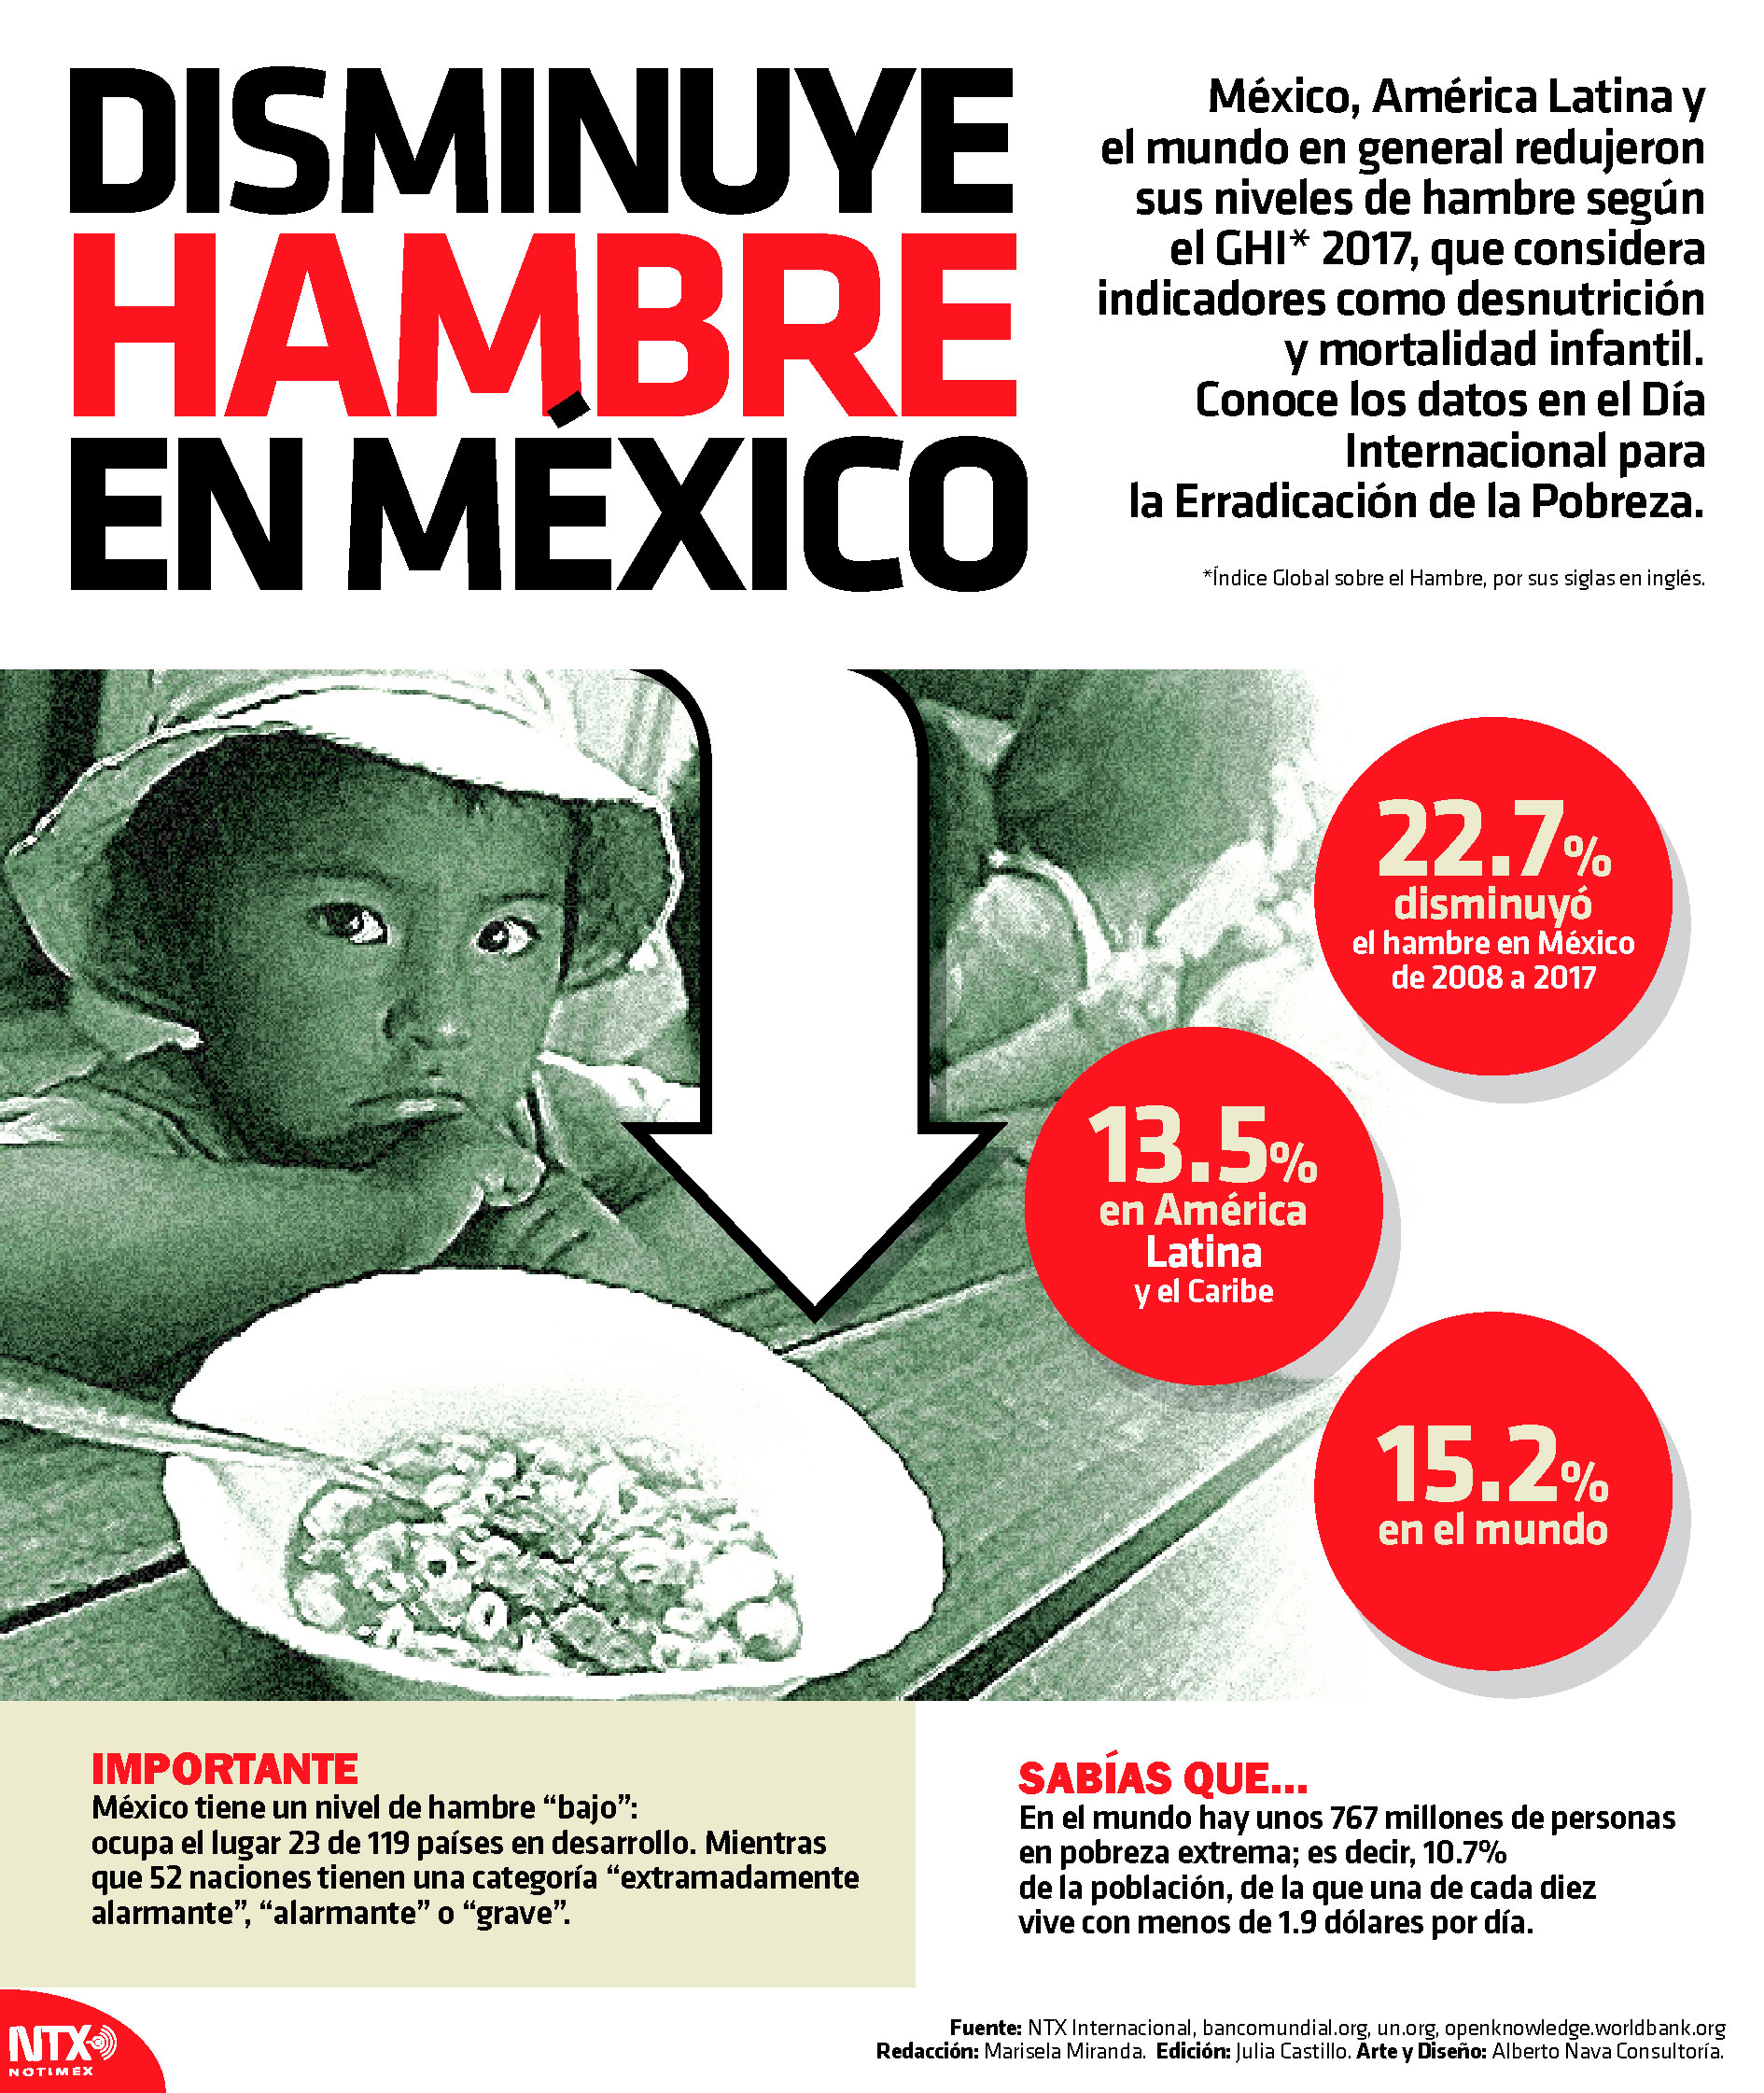 Disminuye hambre en Mxico